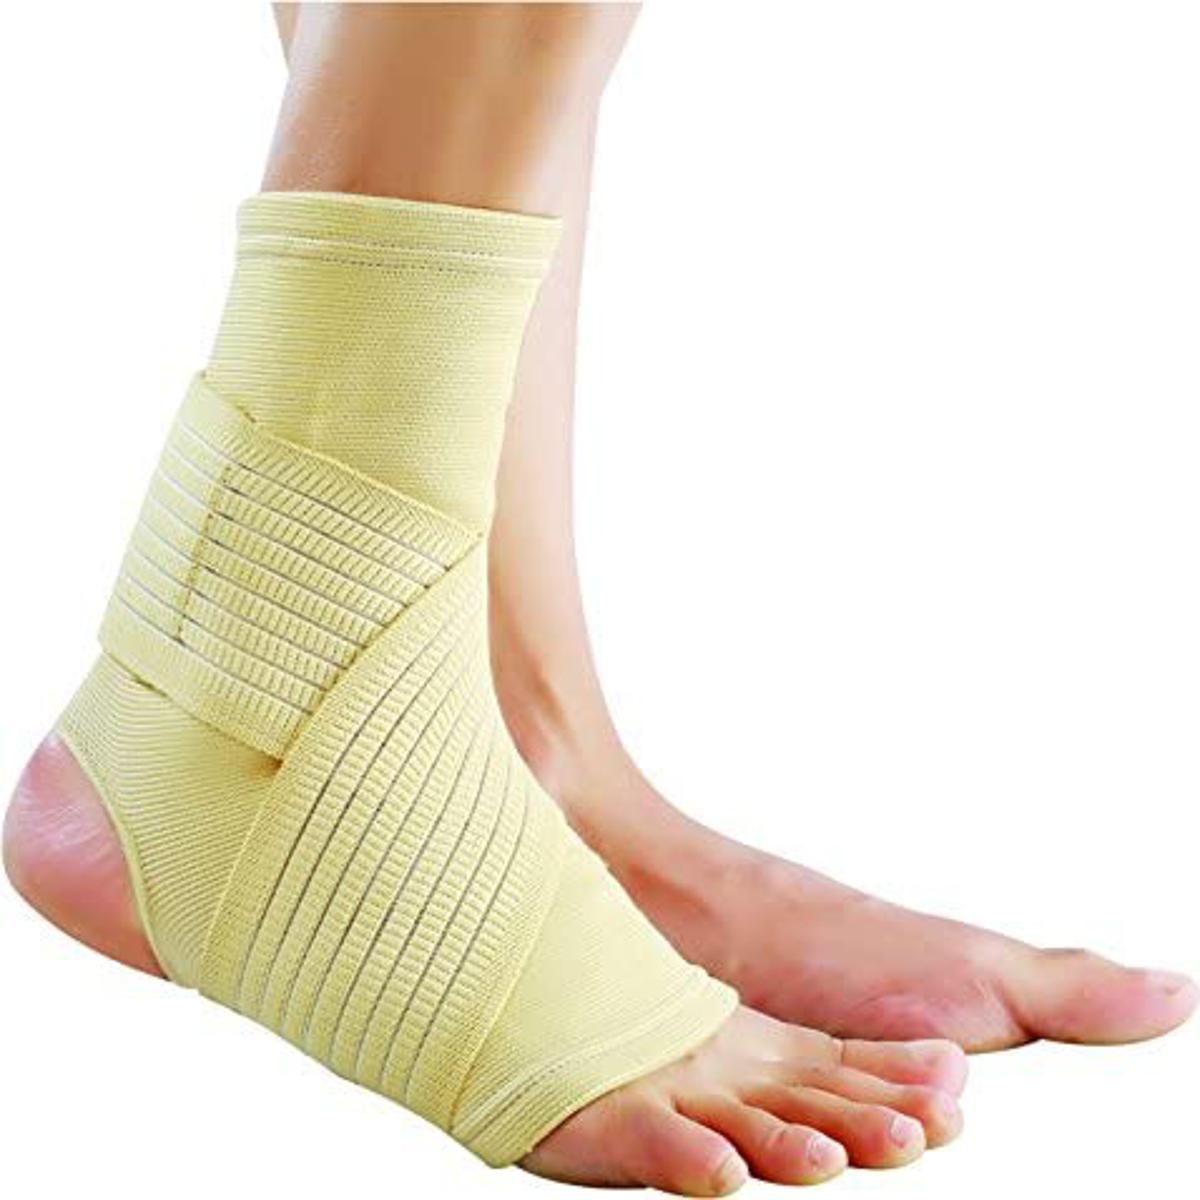 Buy Sego Ankle Binder Medium, 1 Count Online